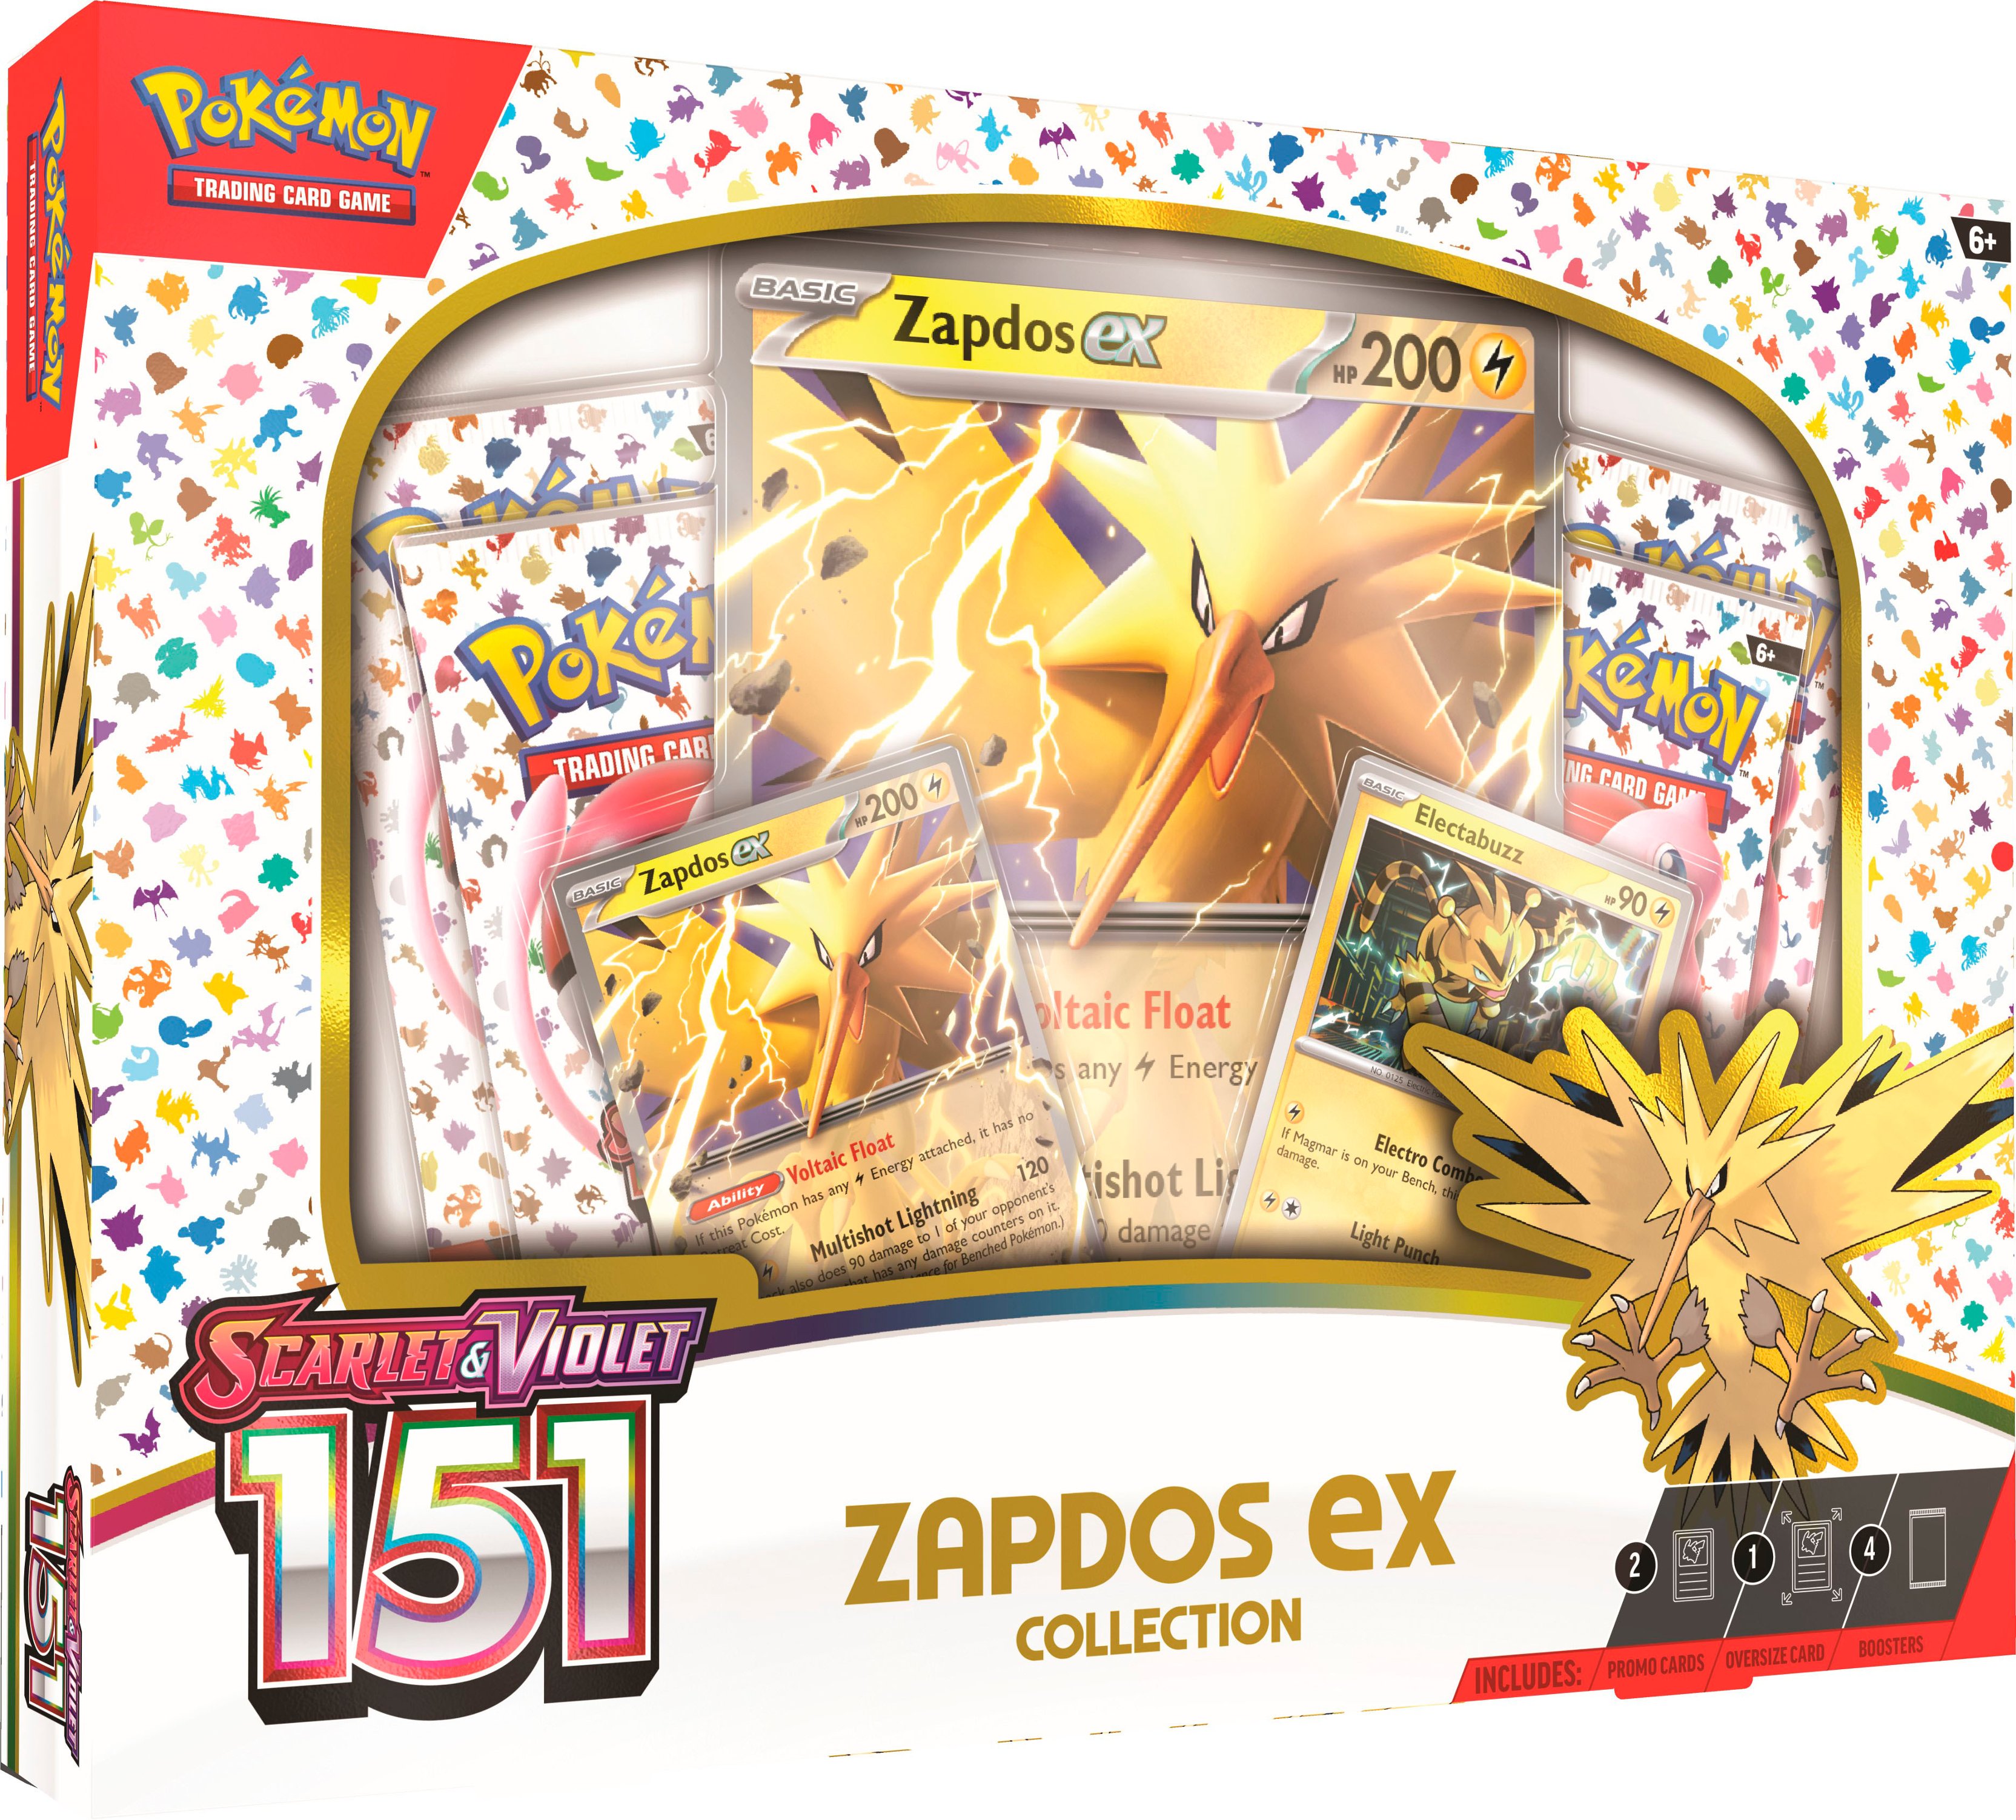 Pokémon Trading Card Game: 151 ex Box 290-87313 - Buy